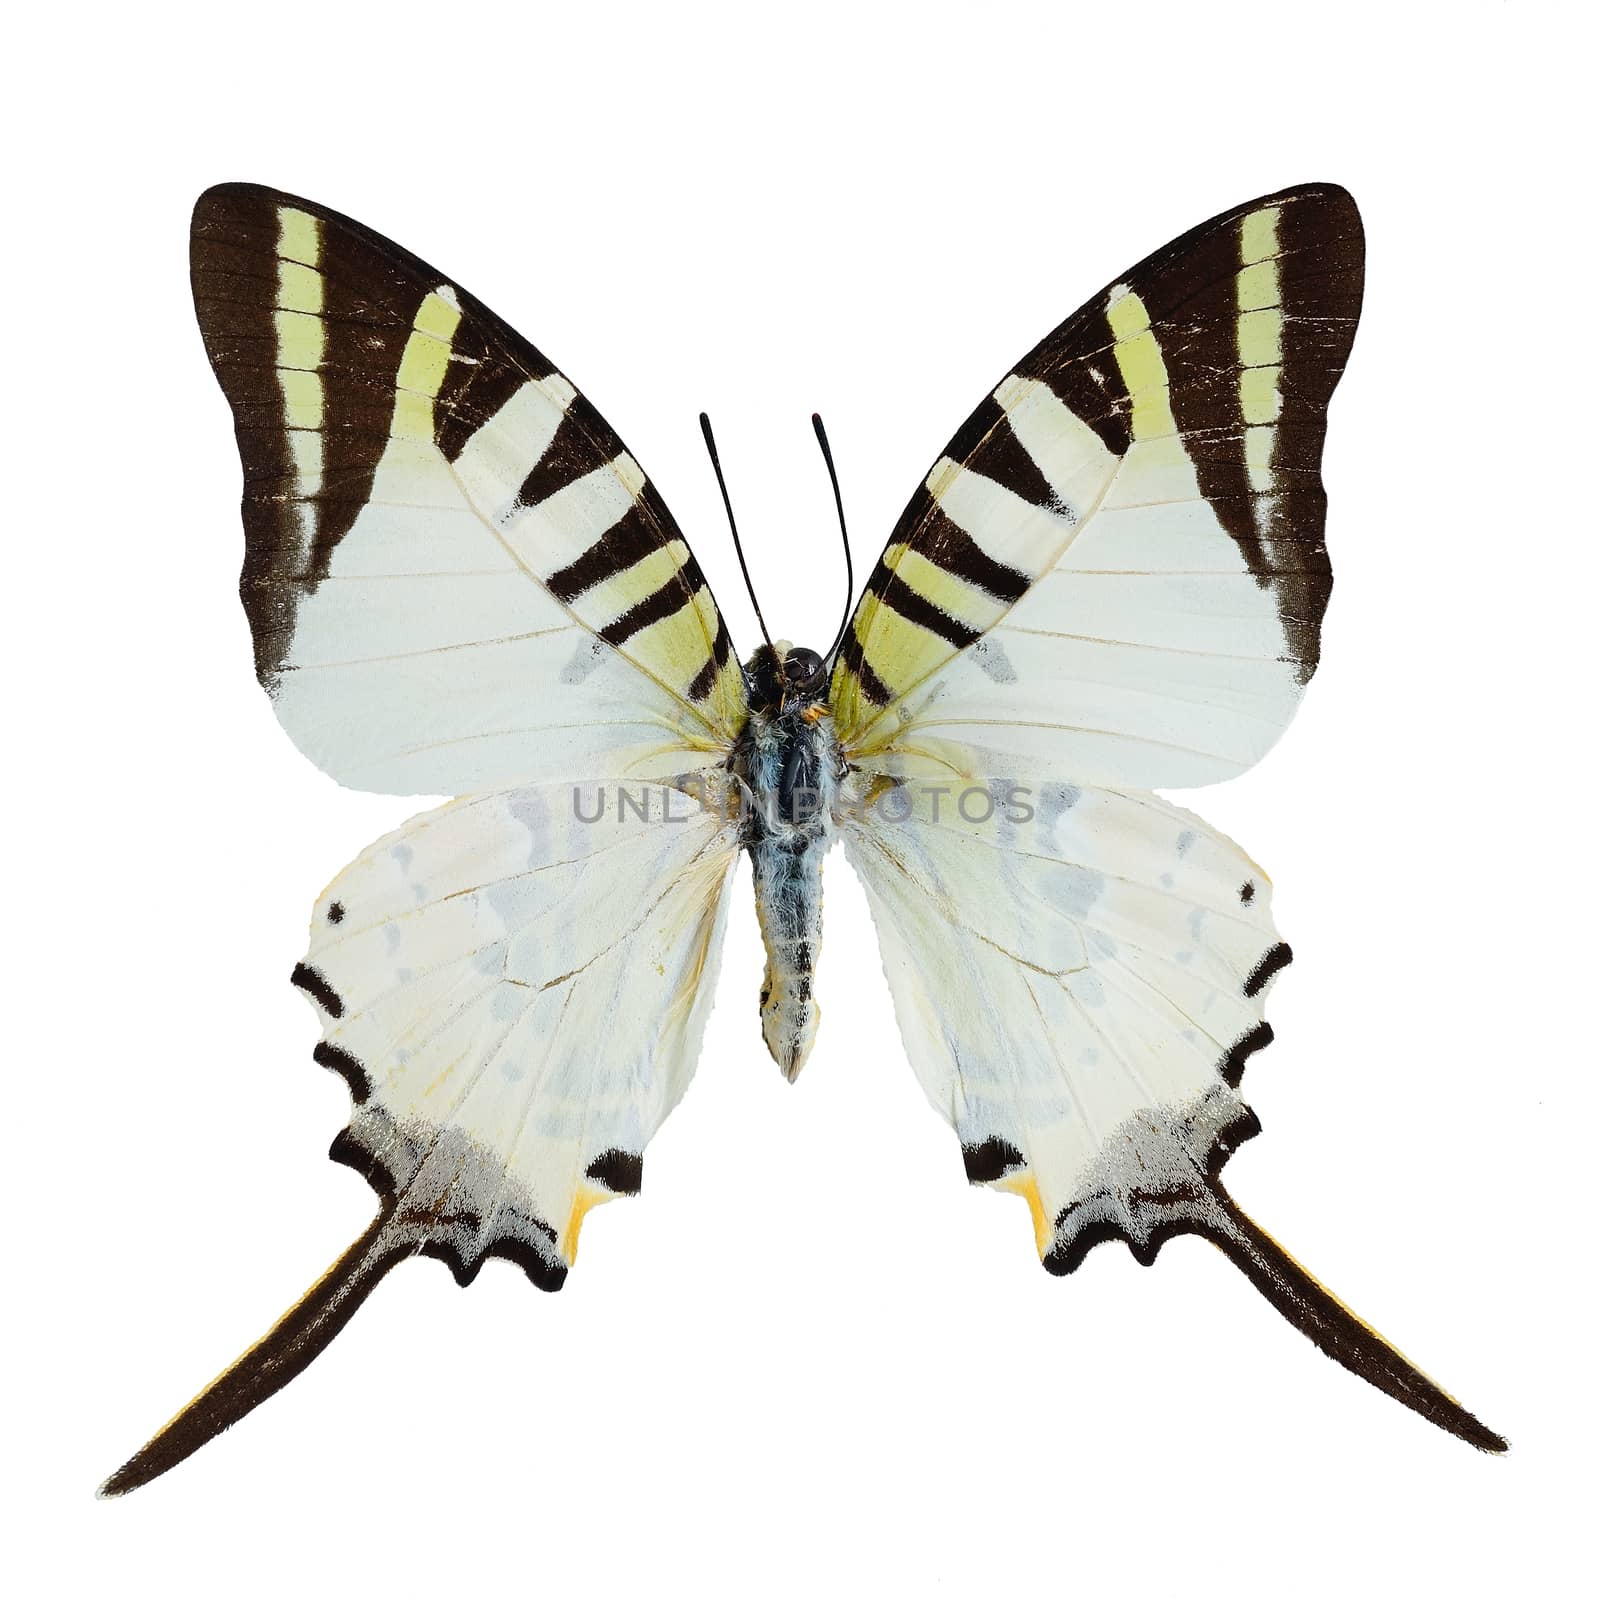 Five Bar Swordtail butterfly by panuruangjan